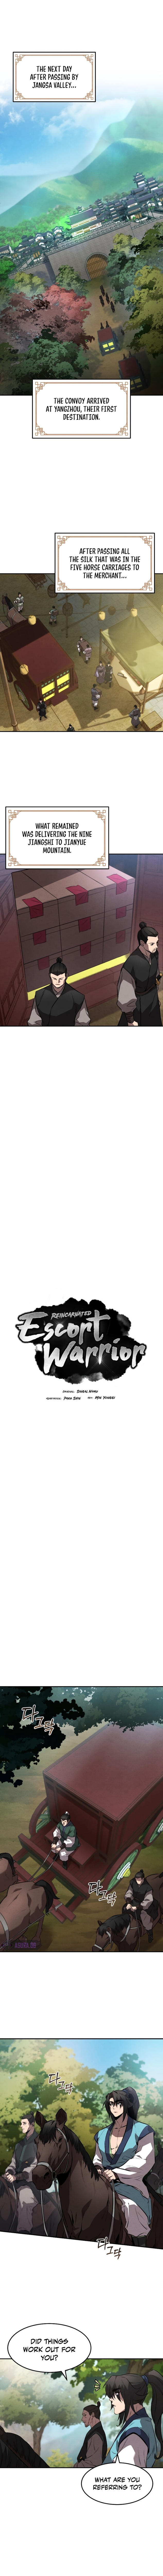 Reincarnated Escort Warrior - Chapter 26 Page 2